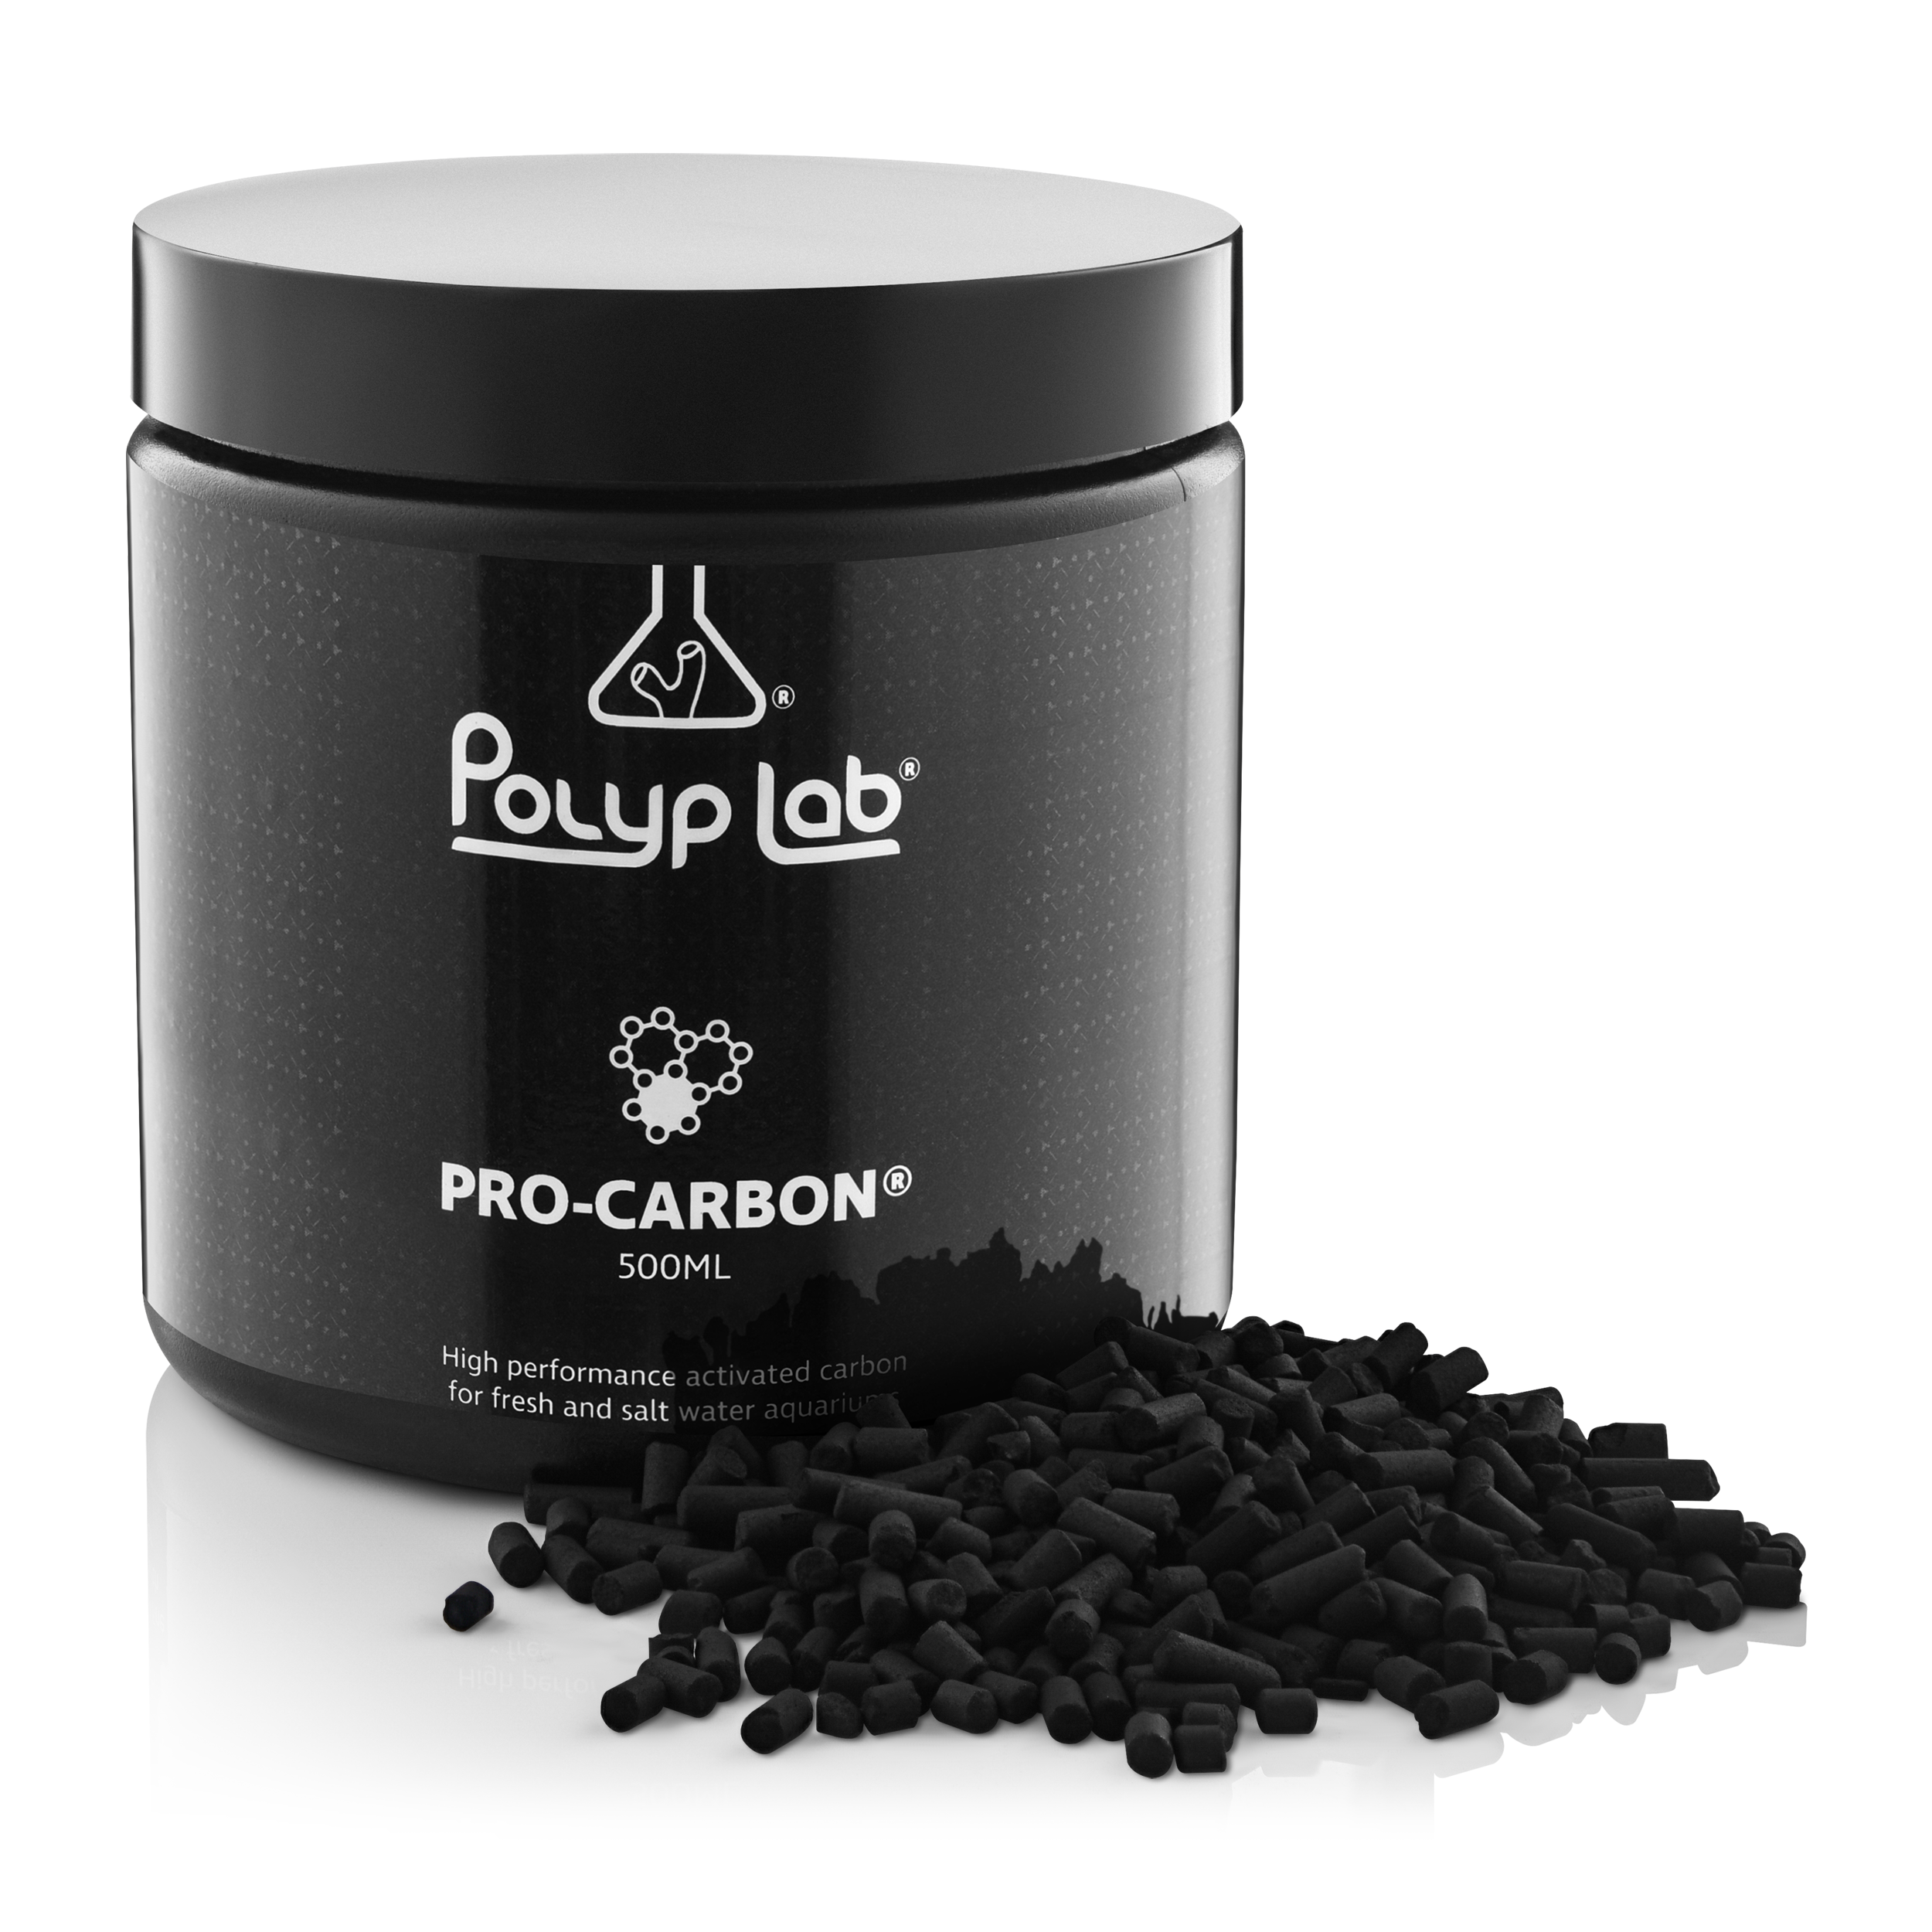 Polyplab Pro-Carbon - 500 ml